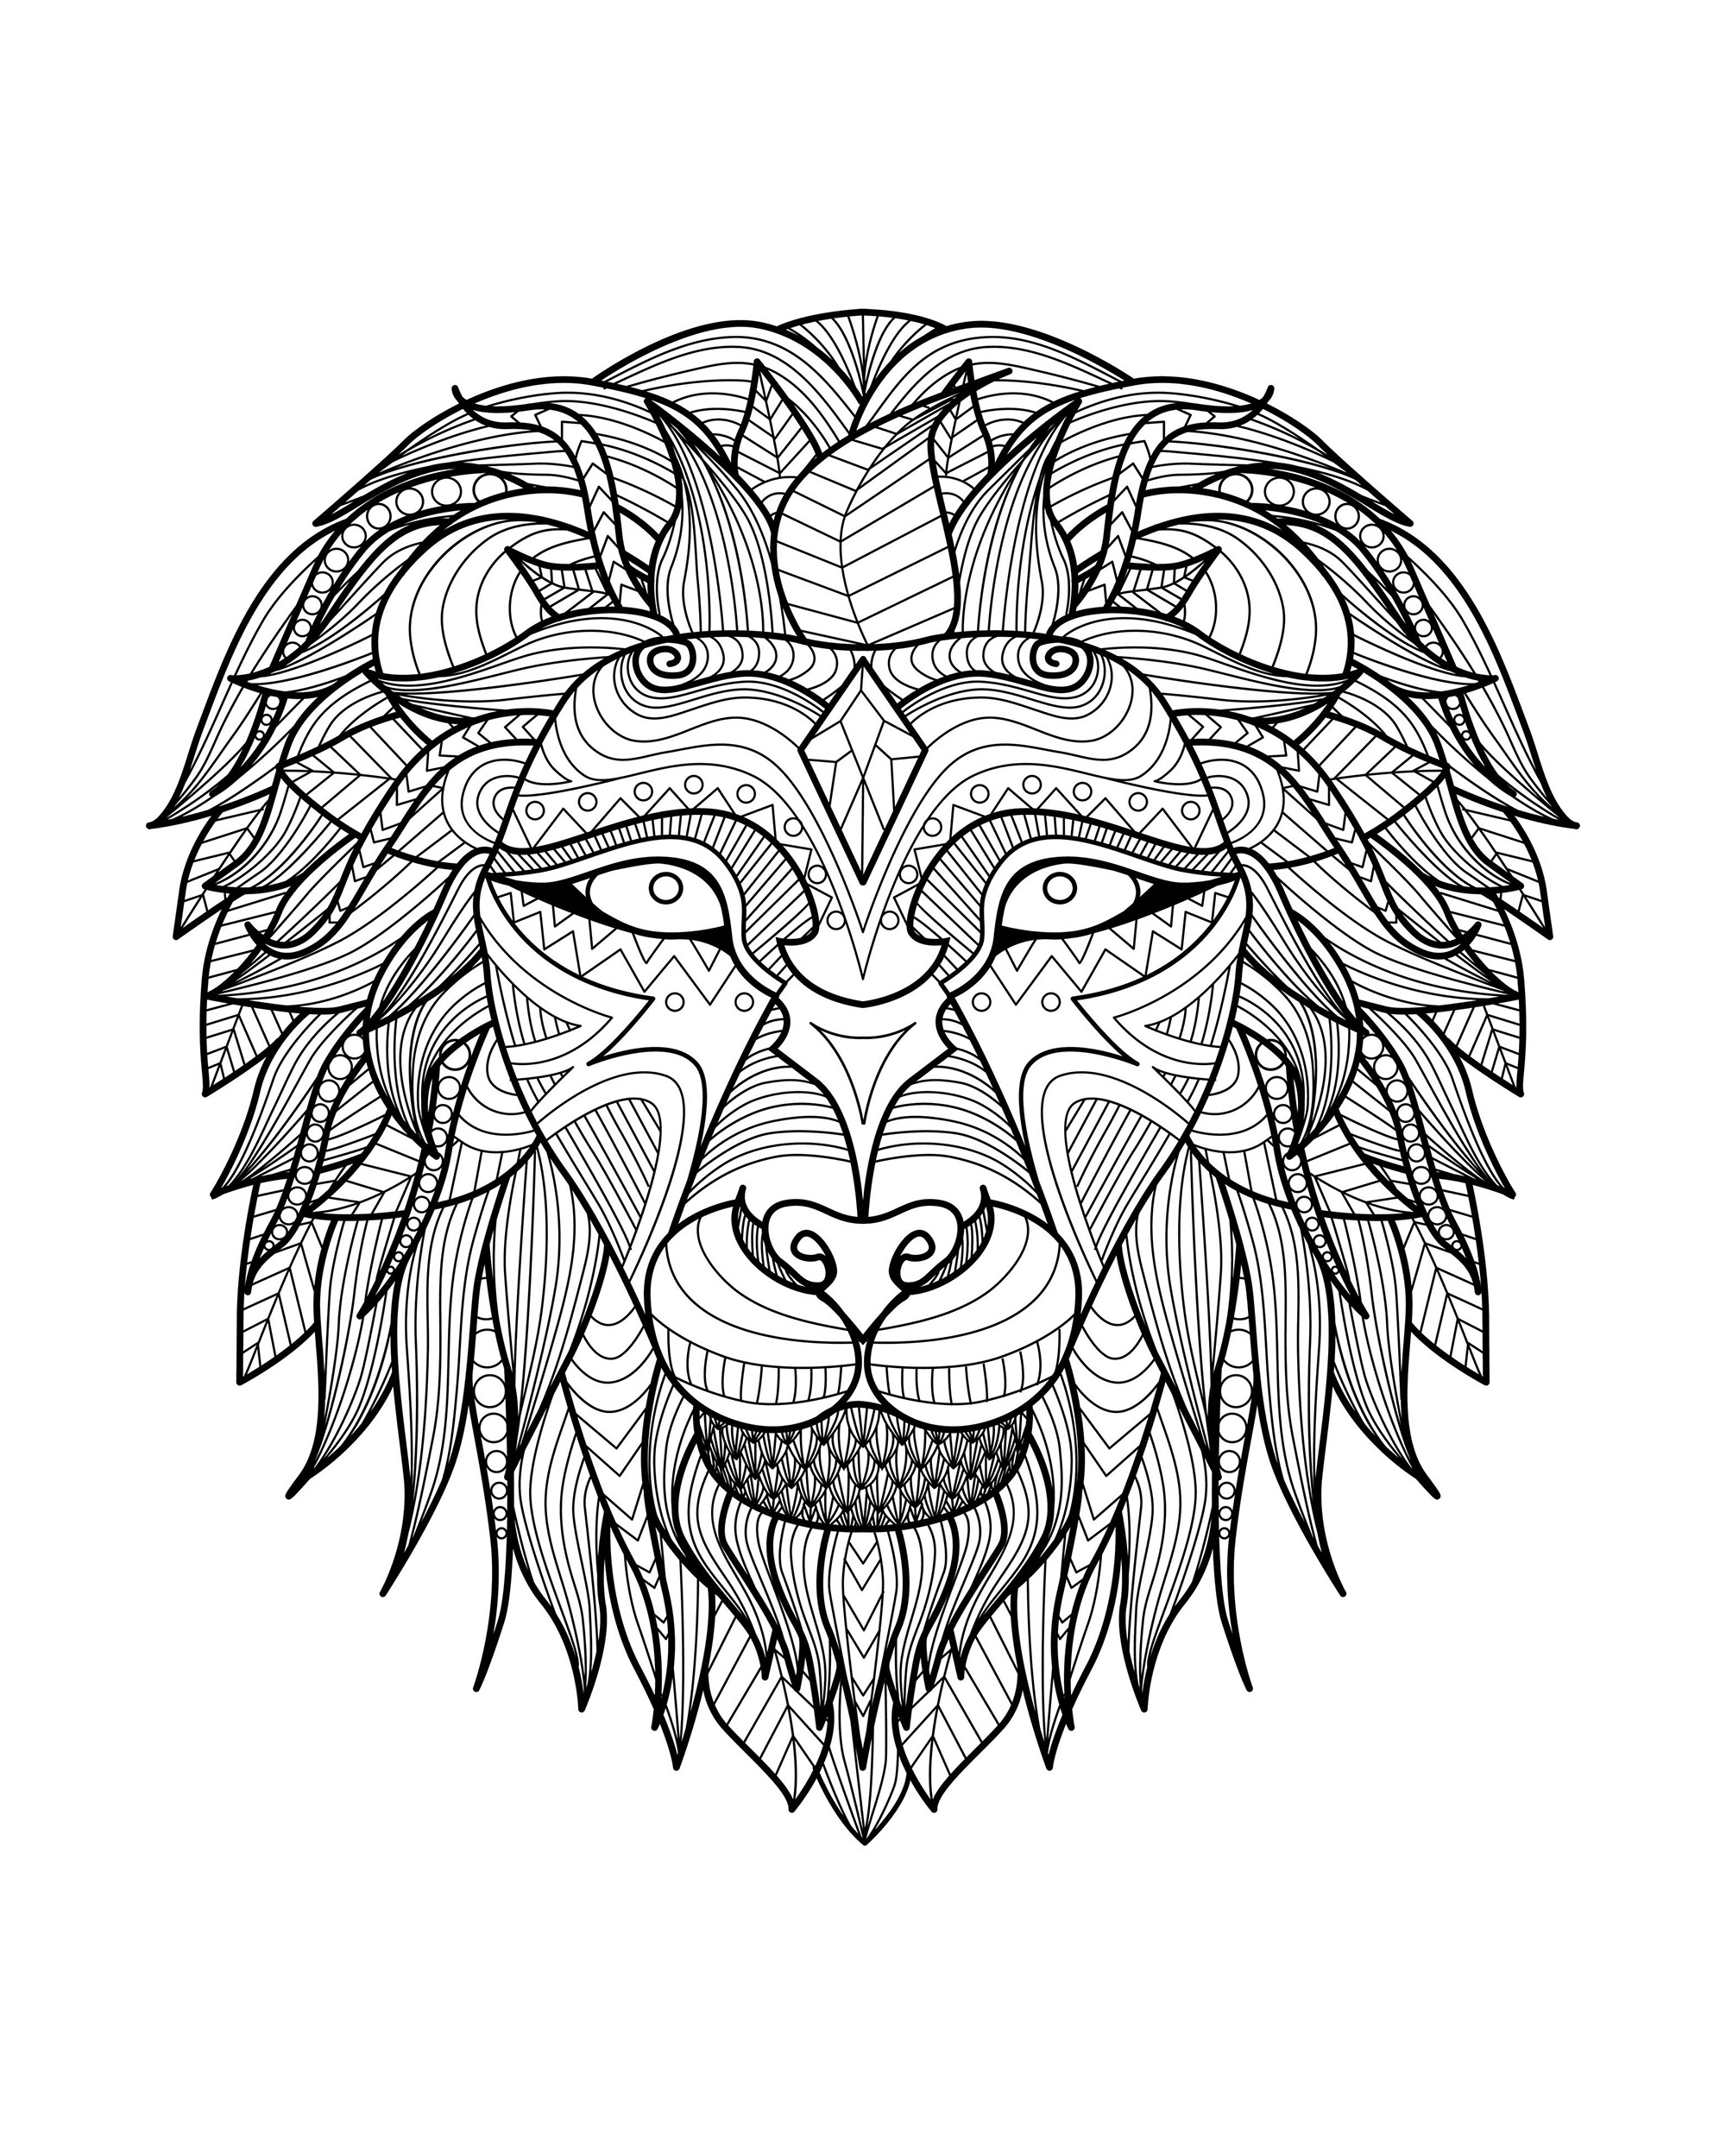 Lion head 2 - Lions Adult Coloring Pages